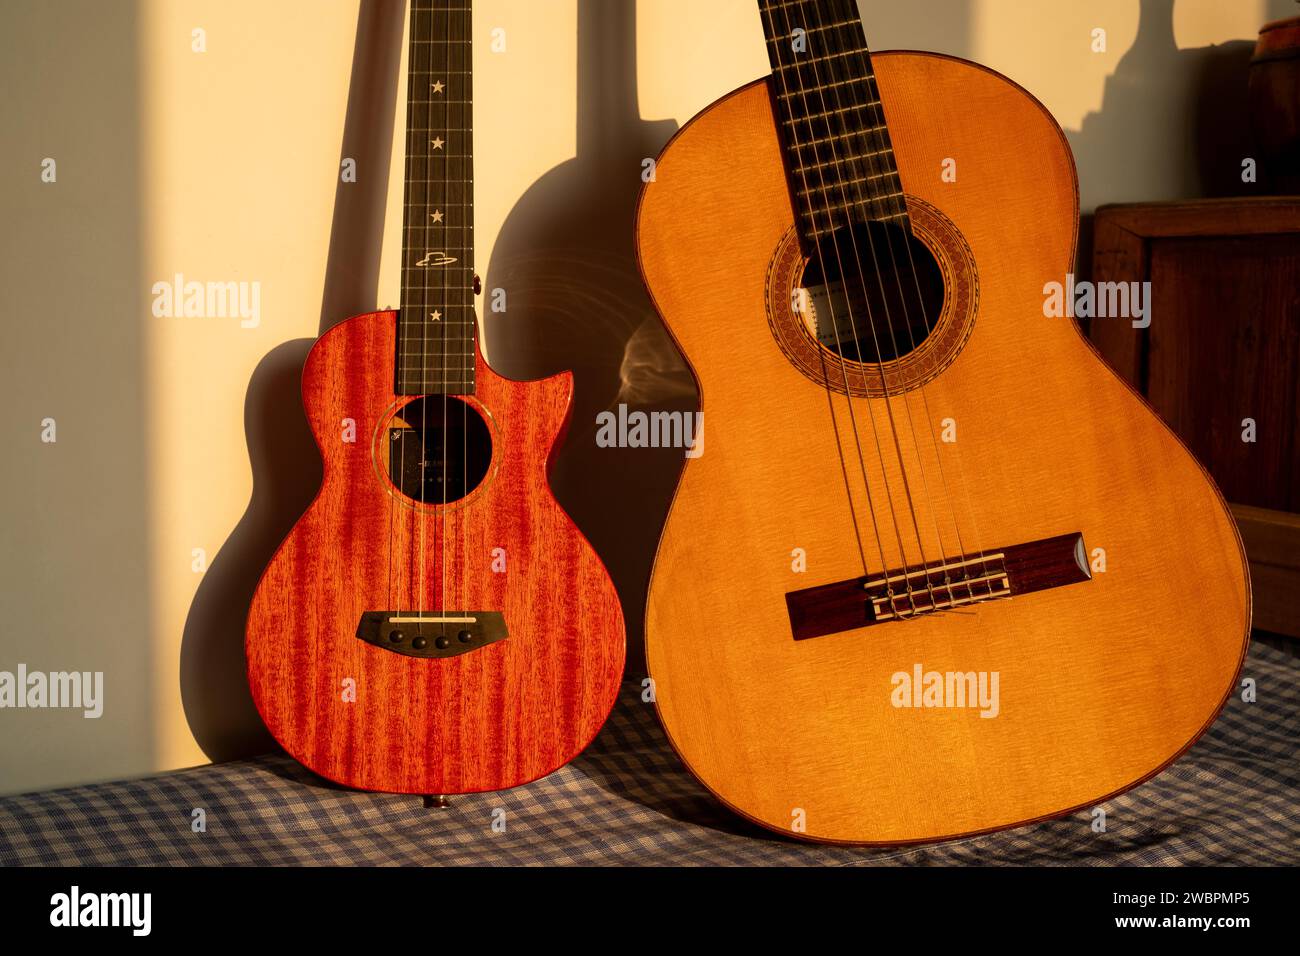 A guitar and a ukulele. Stock Photo